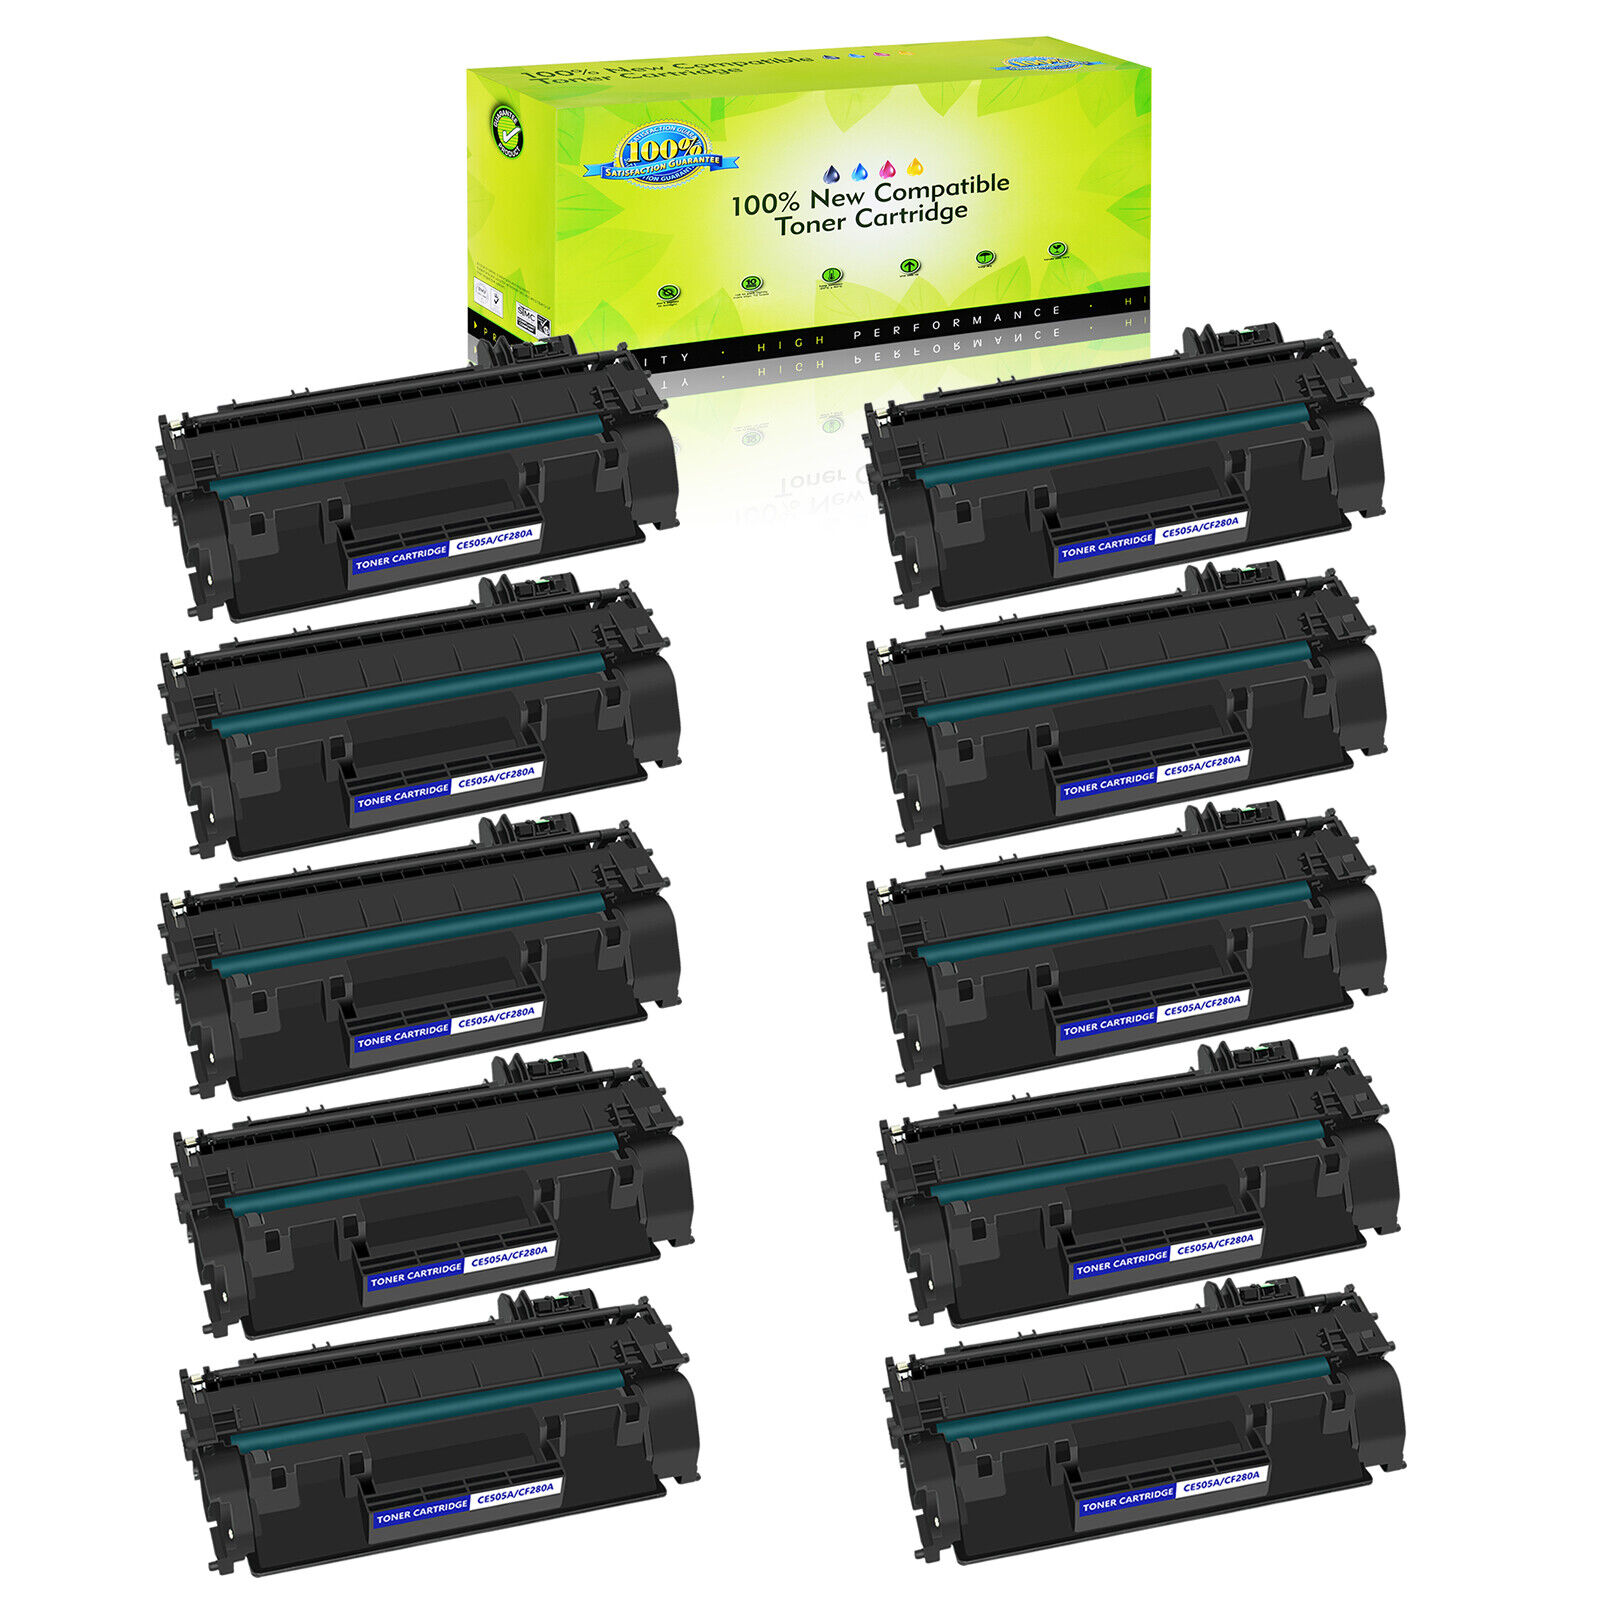 10 Pack CE505A 05A Toner Cartridge for HP LaserJet P2035 P2035n P2055dn Printer